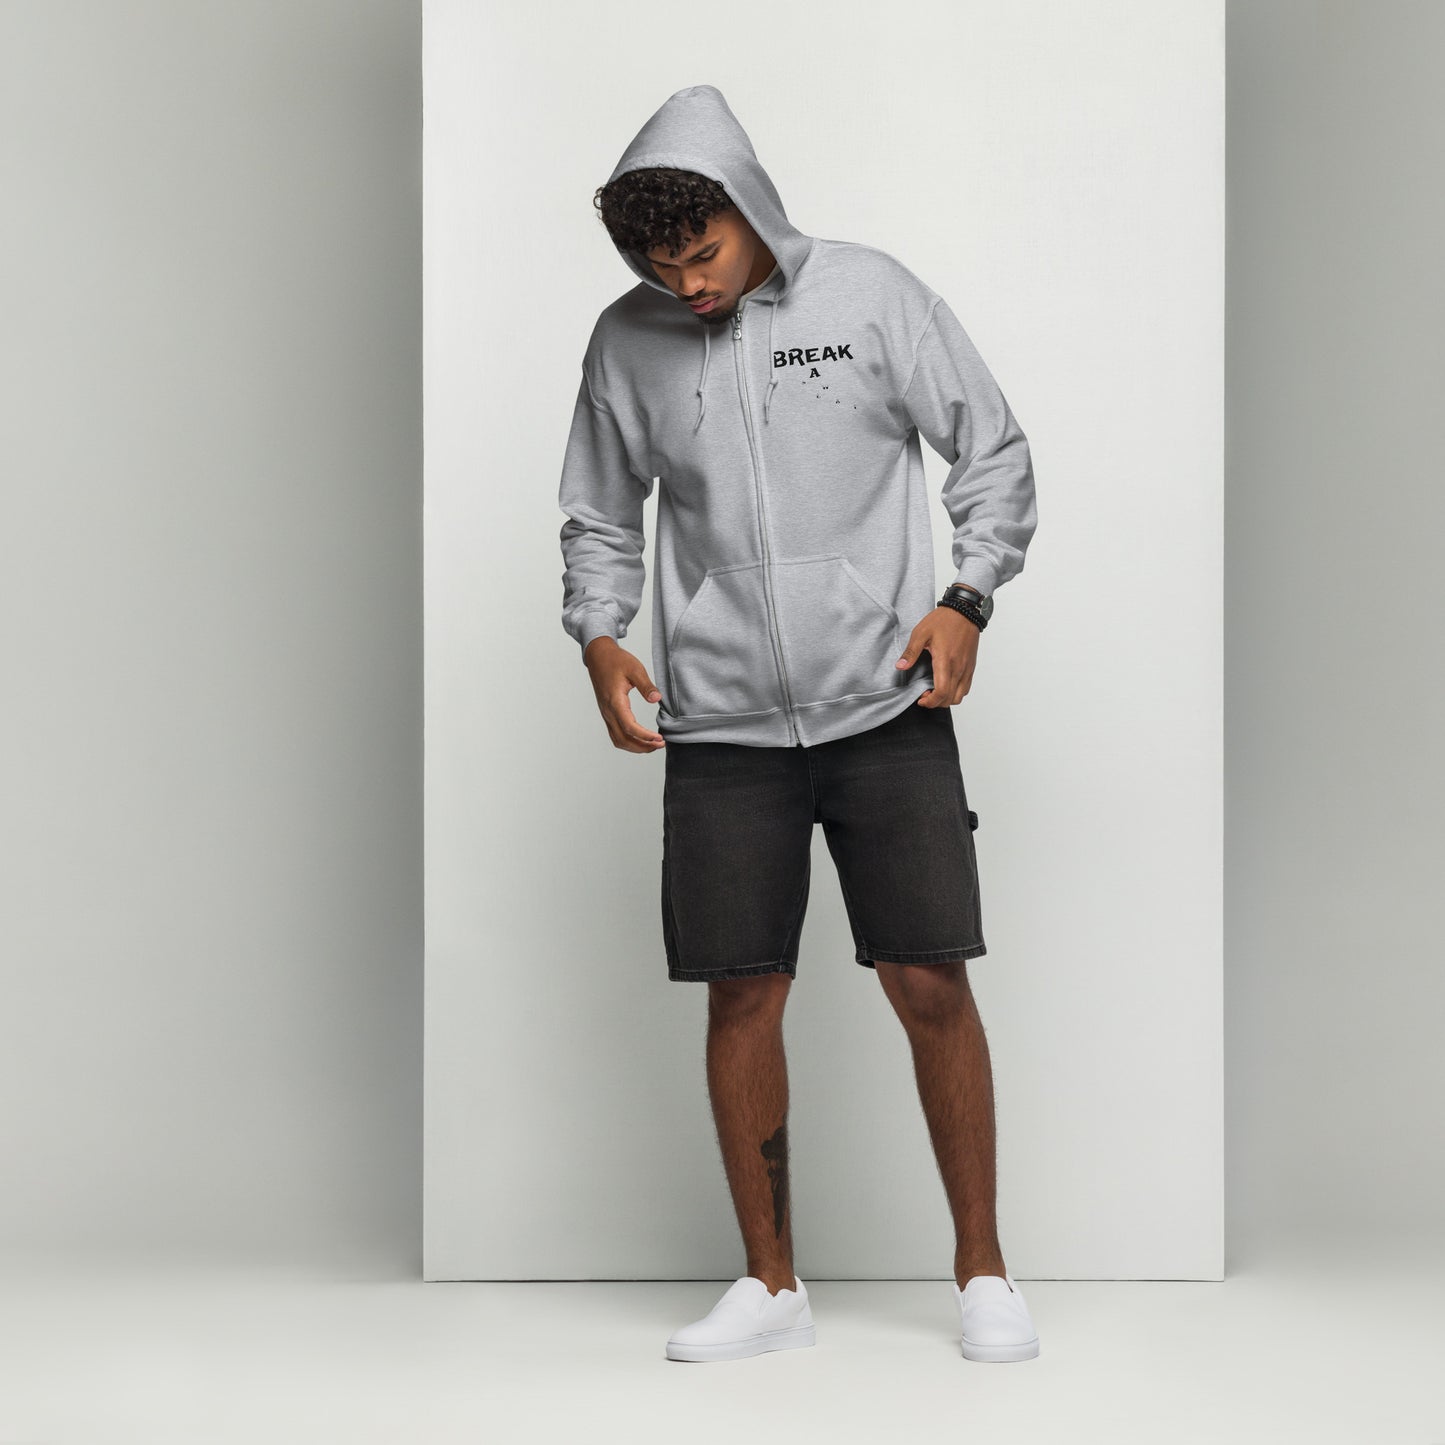 Break a Sweat - Light weigh unisex zip hoodie